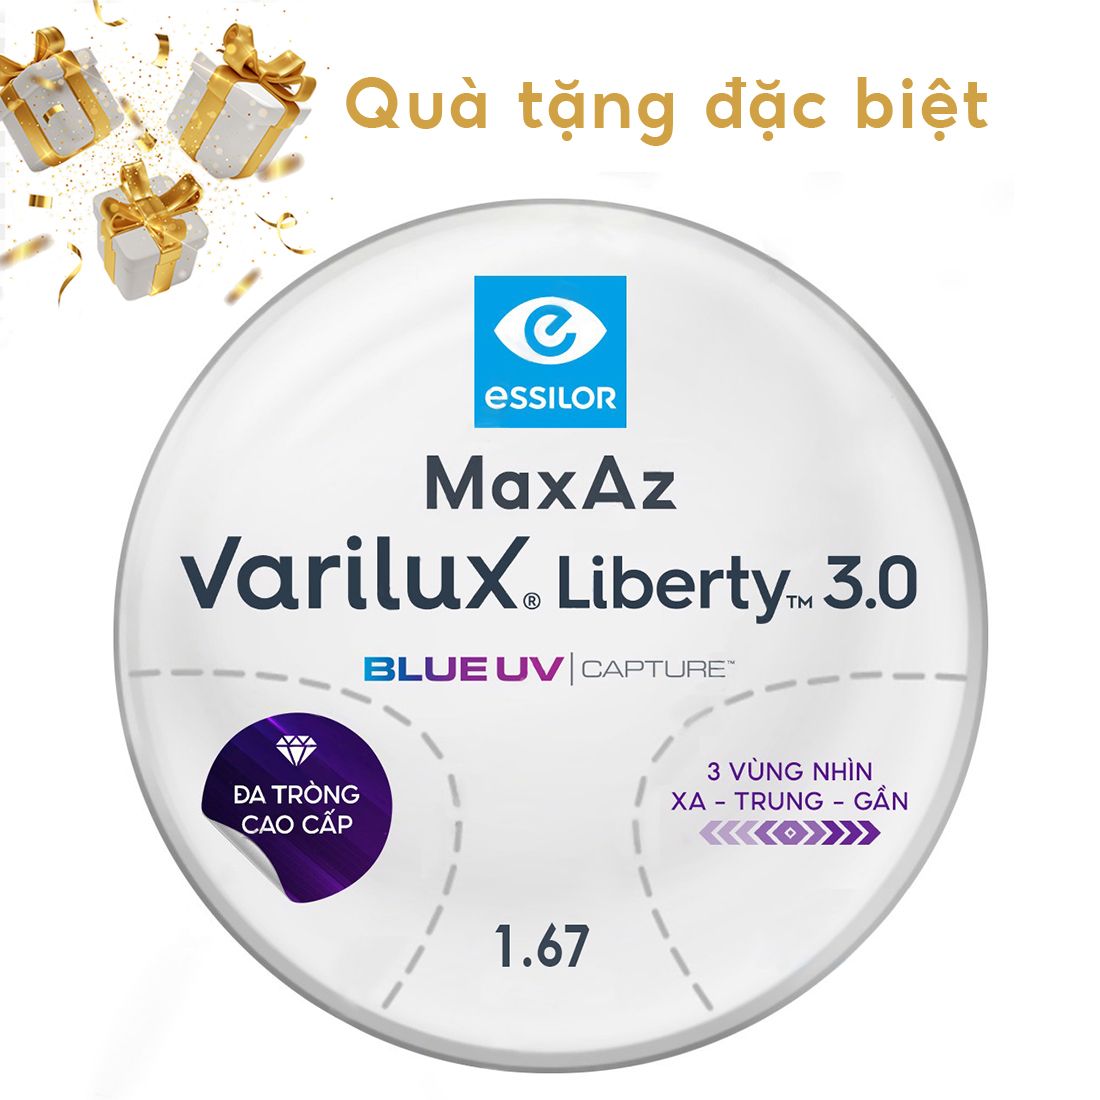  Đa Tròng Cao Cấp Essilor Varilux Liberty 3.0 BlueUV Capture Váng Max Az 